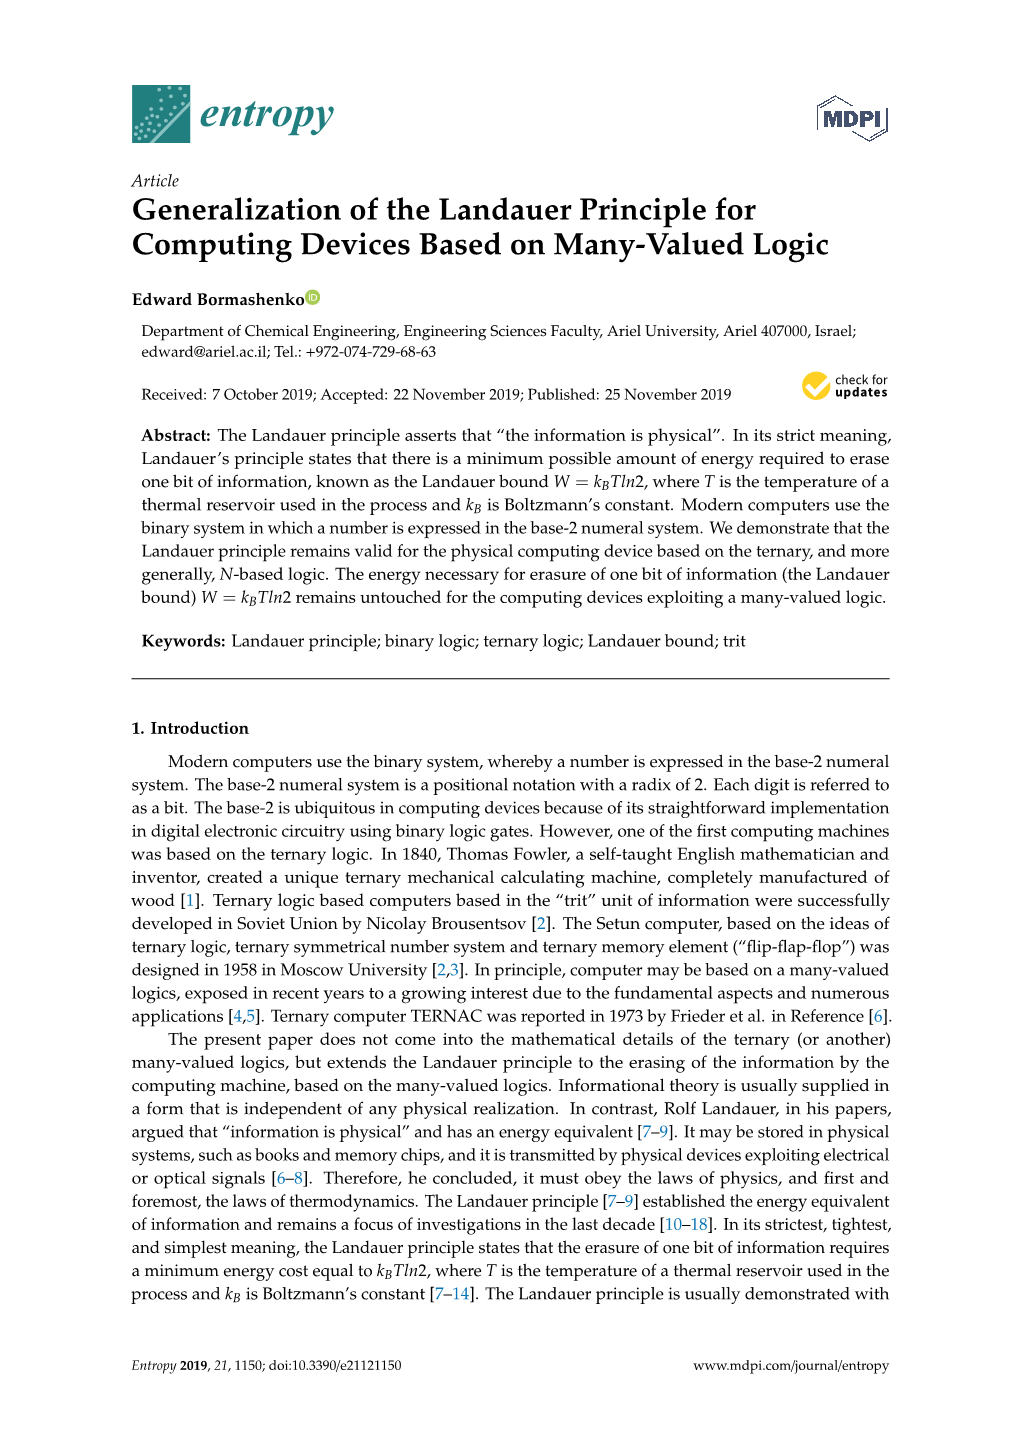 Generalization of the Landauer Principle for Computing Devices Based on Many-Valued Logic